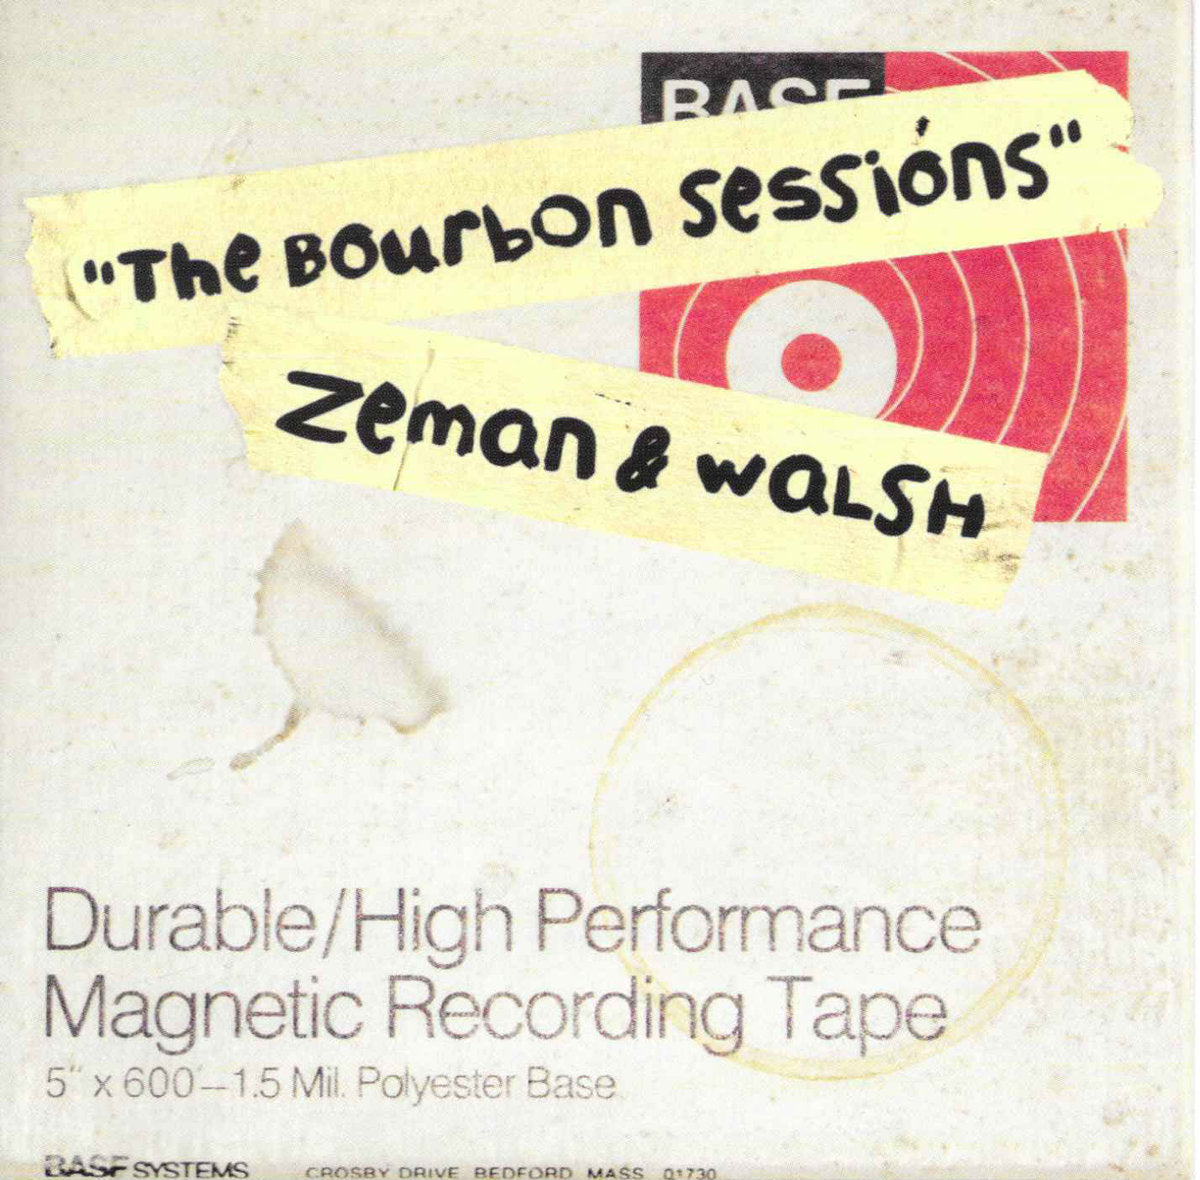 Brock Zeman & Dan Walsh - The Bourbon Sessions CD